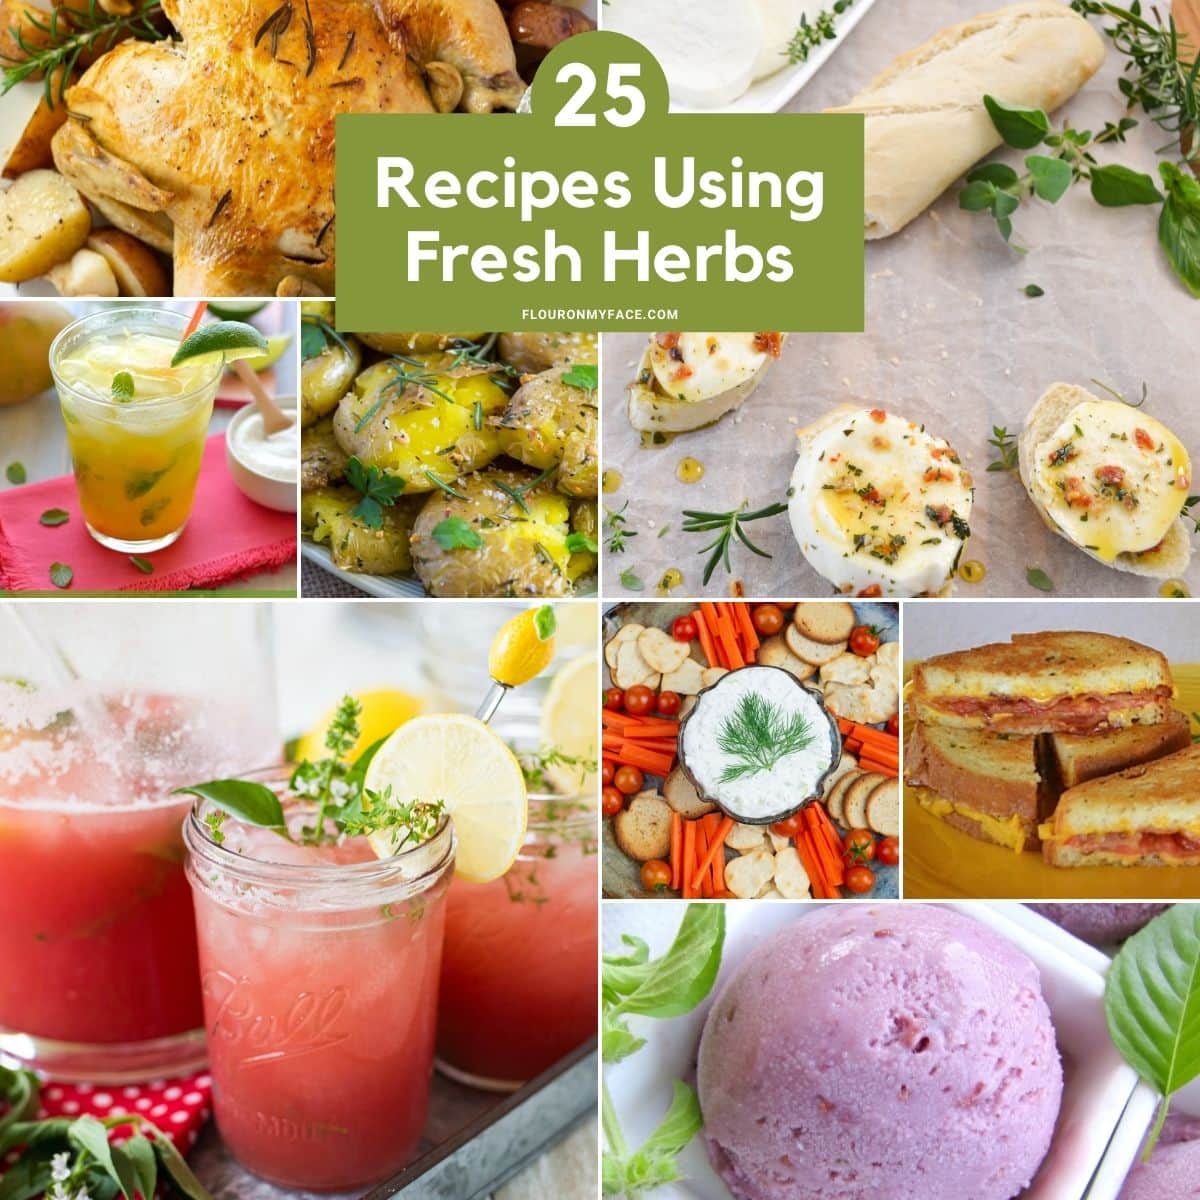 25 Recipes Using Fresh Herbs - Flour On My Face